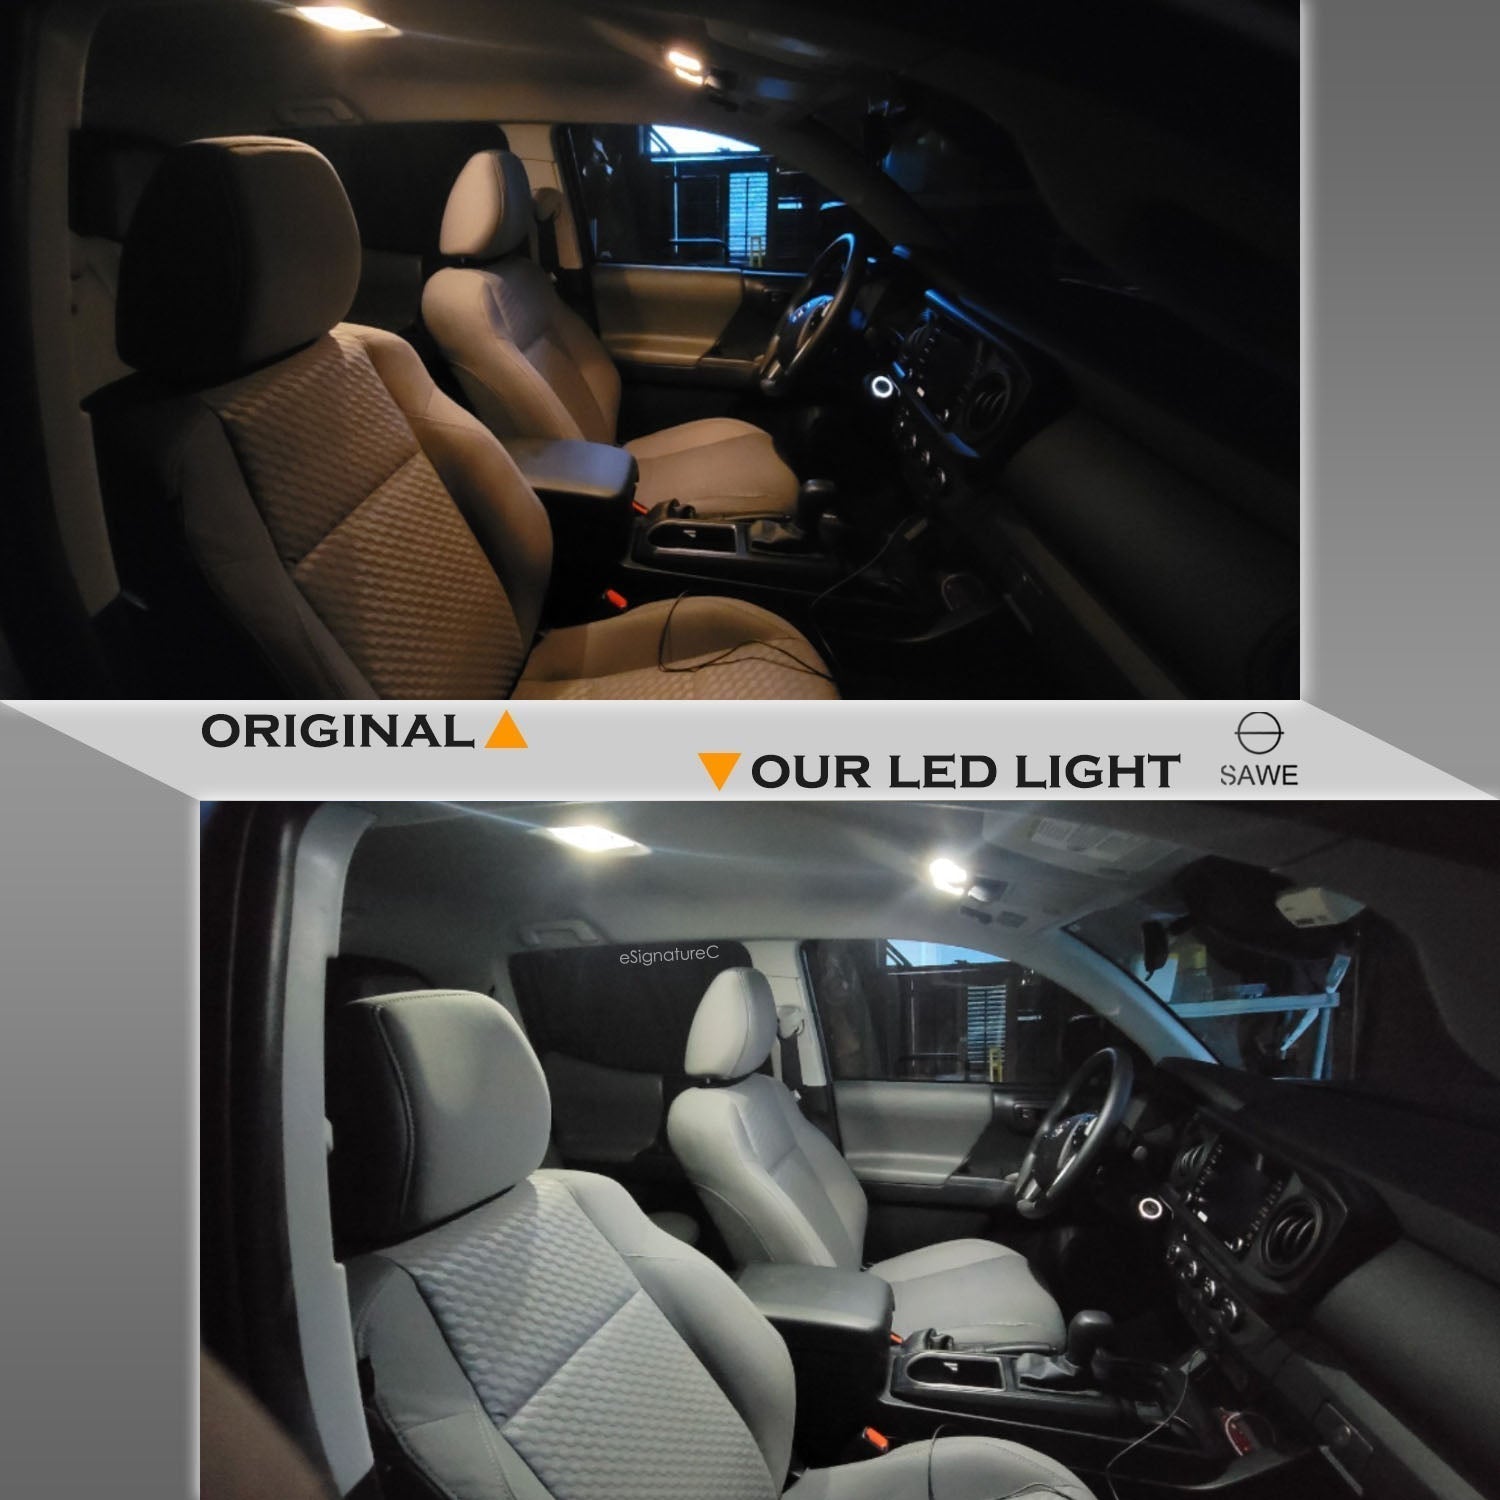 For Volkswagen Golf GTi Interior LED Lights - Dome & Map Light Bulbs Package Kit for 1999 - 2005 - White